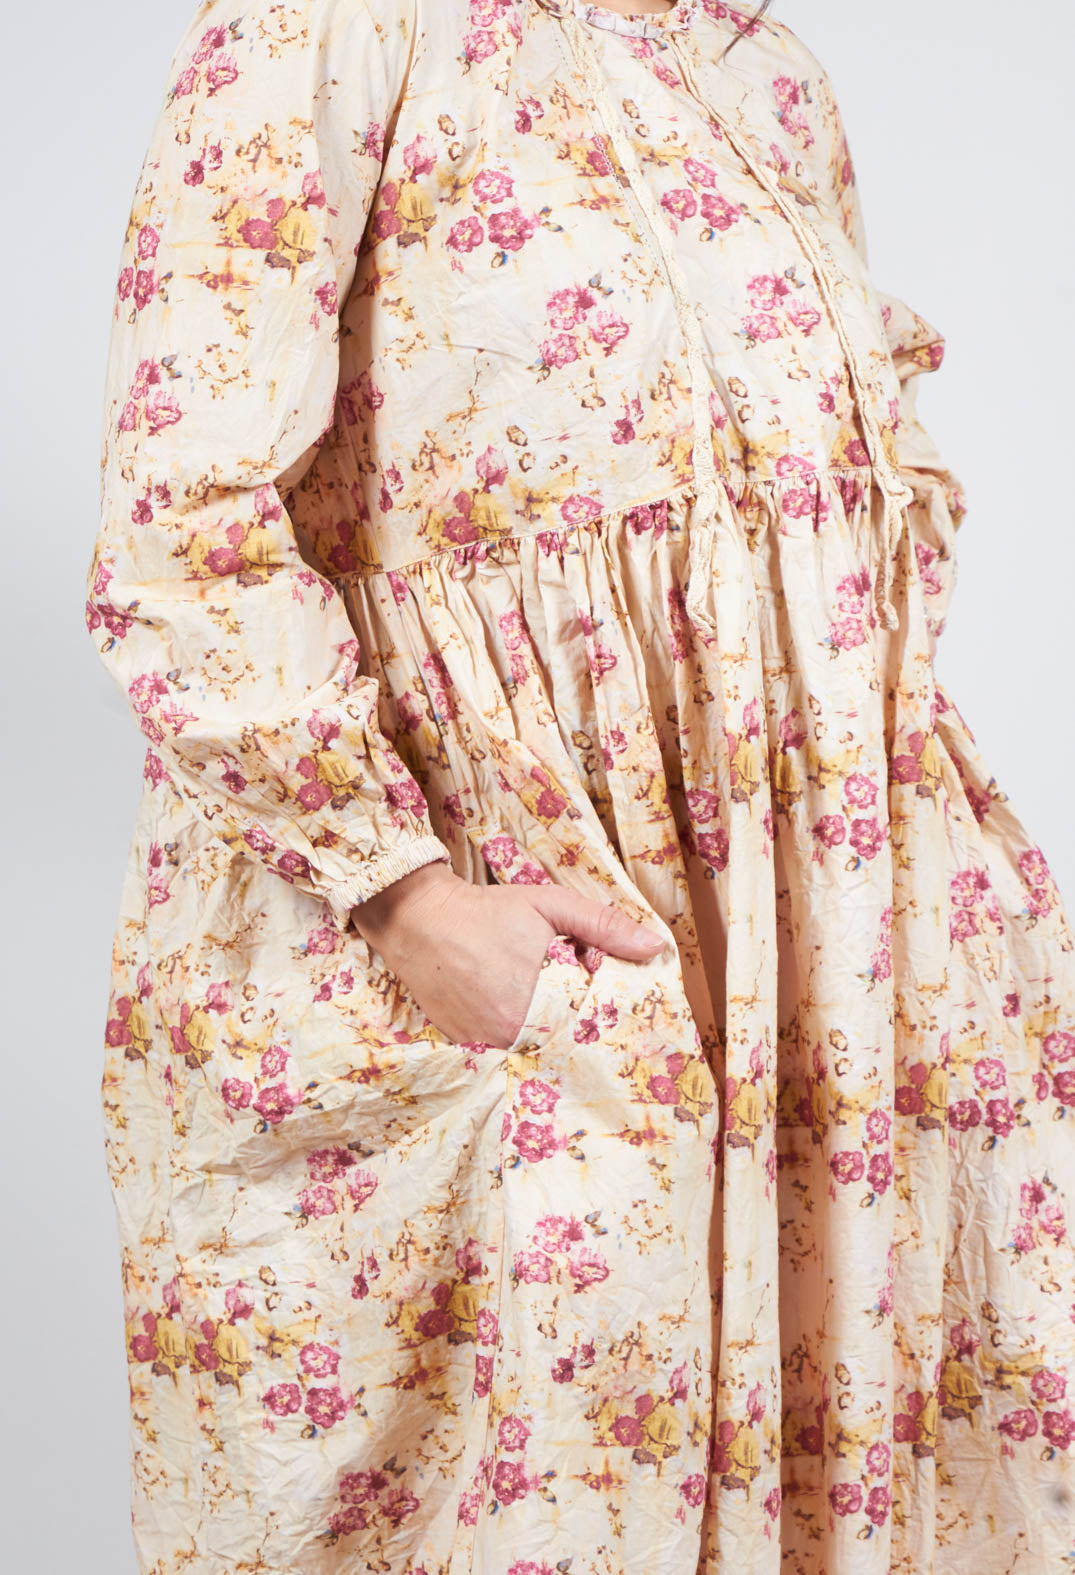 Gully Dress in Flower Cotton